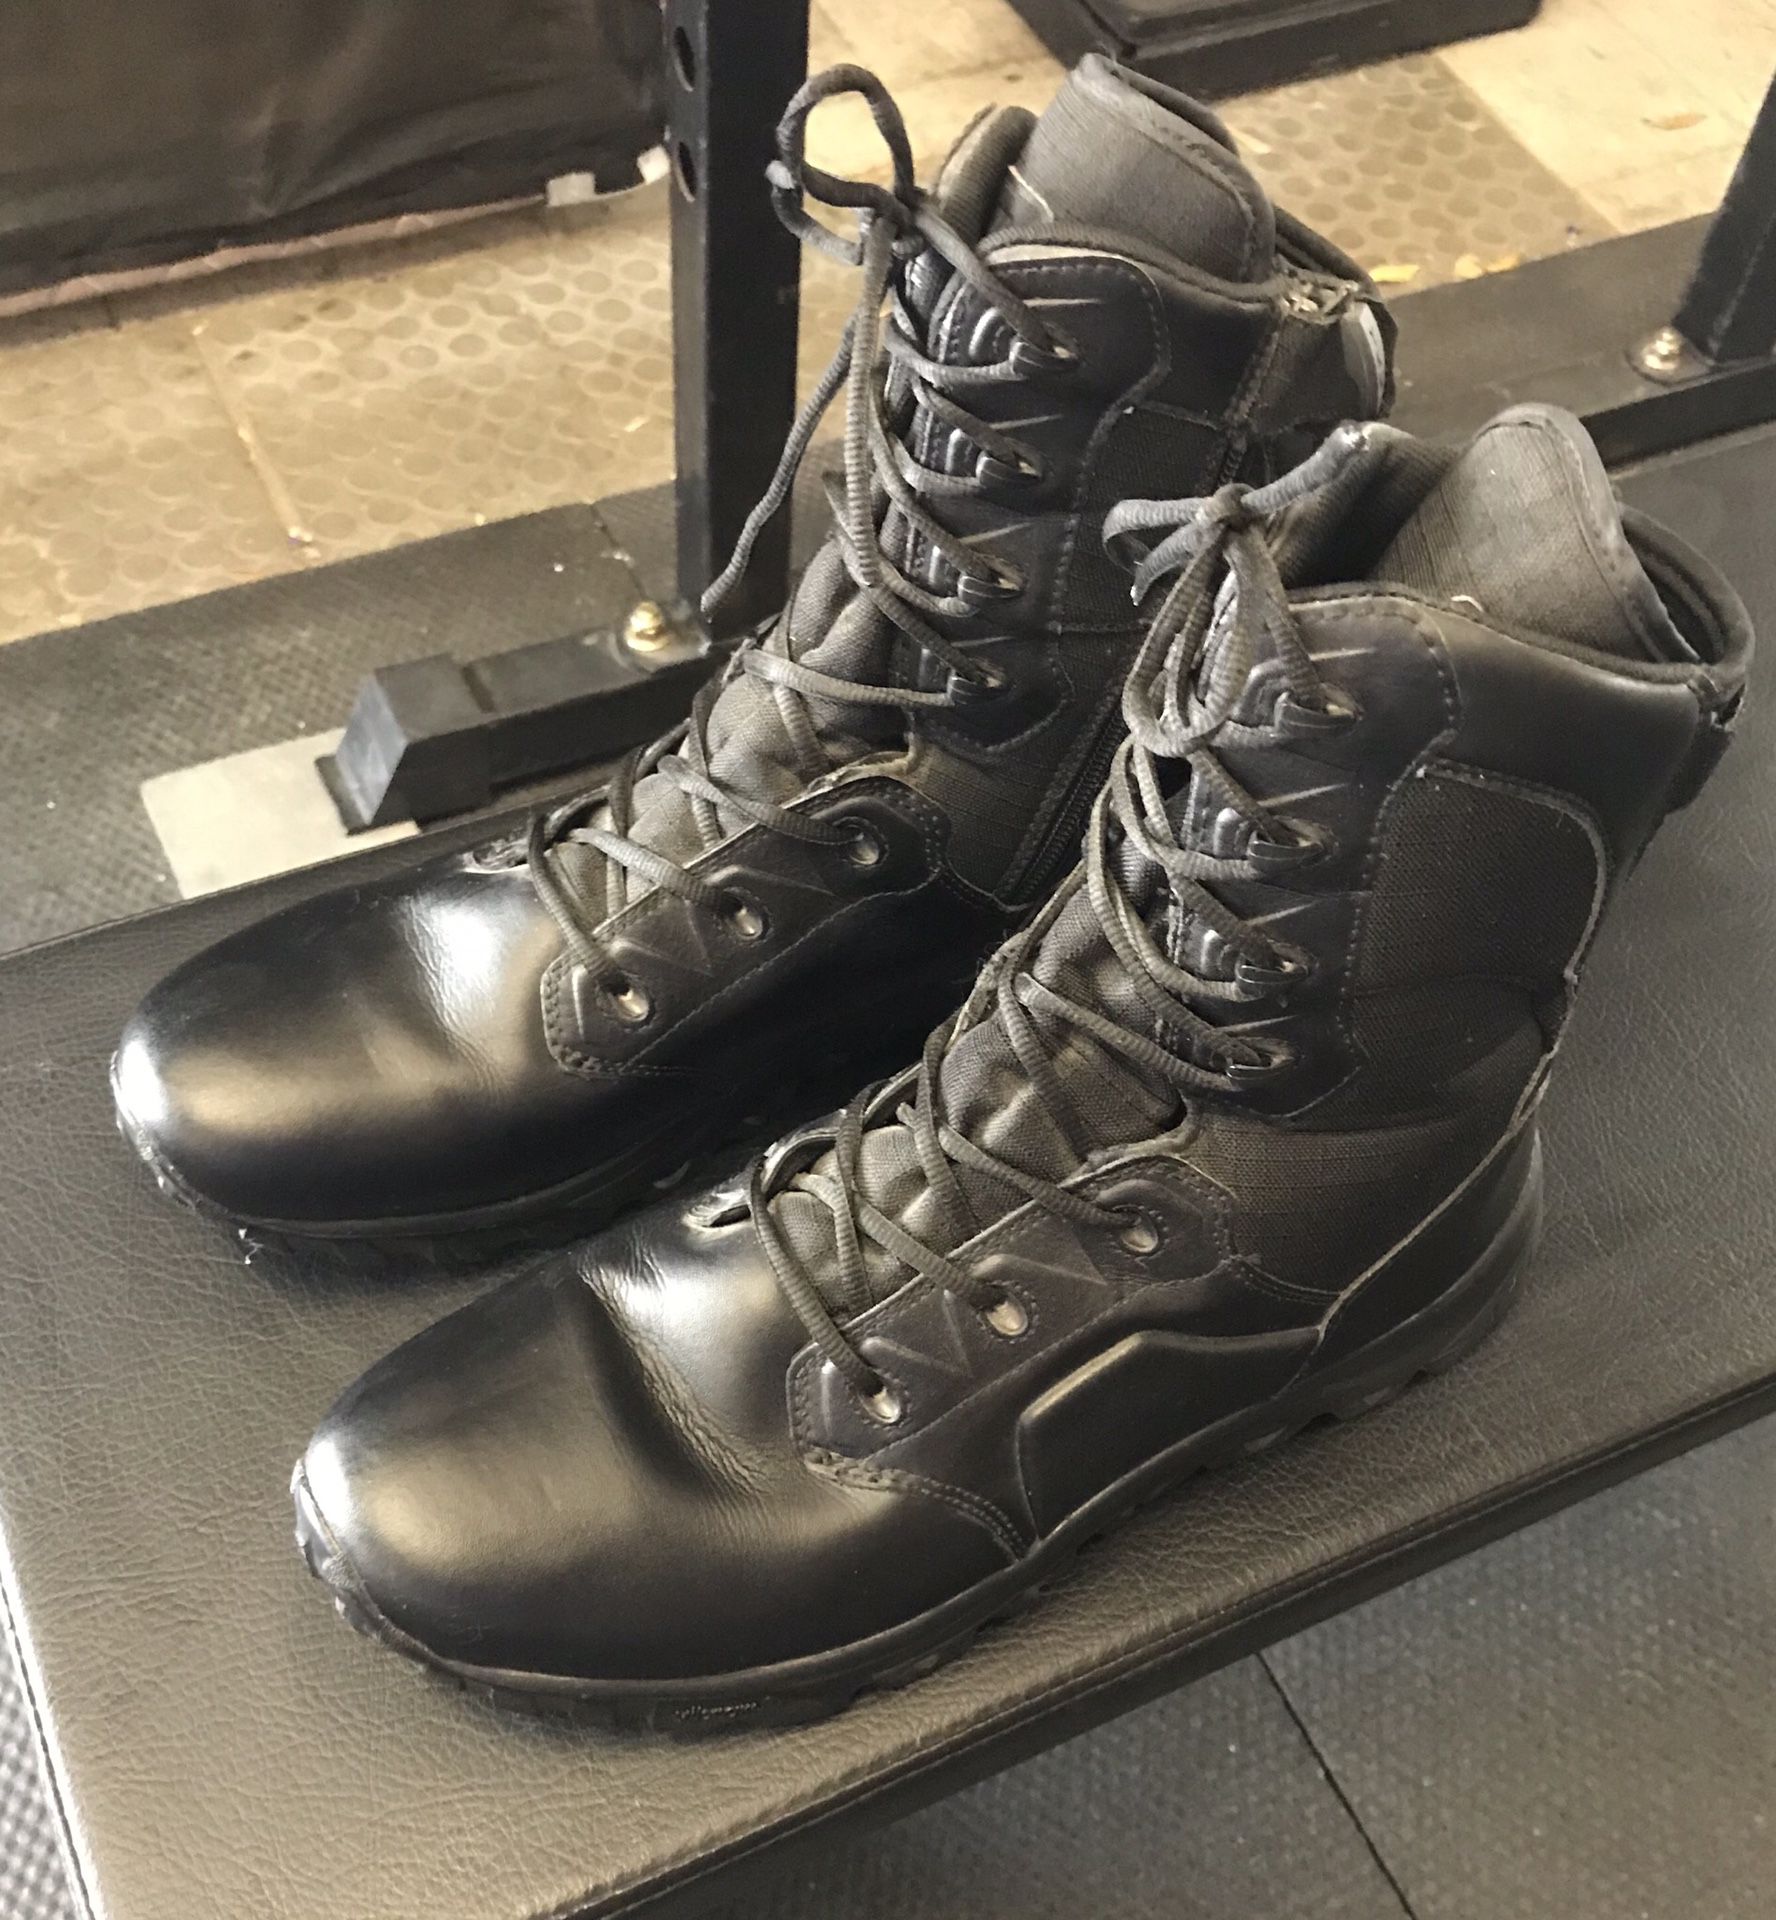 Magnum work boots size 11.5 brand new